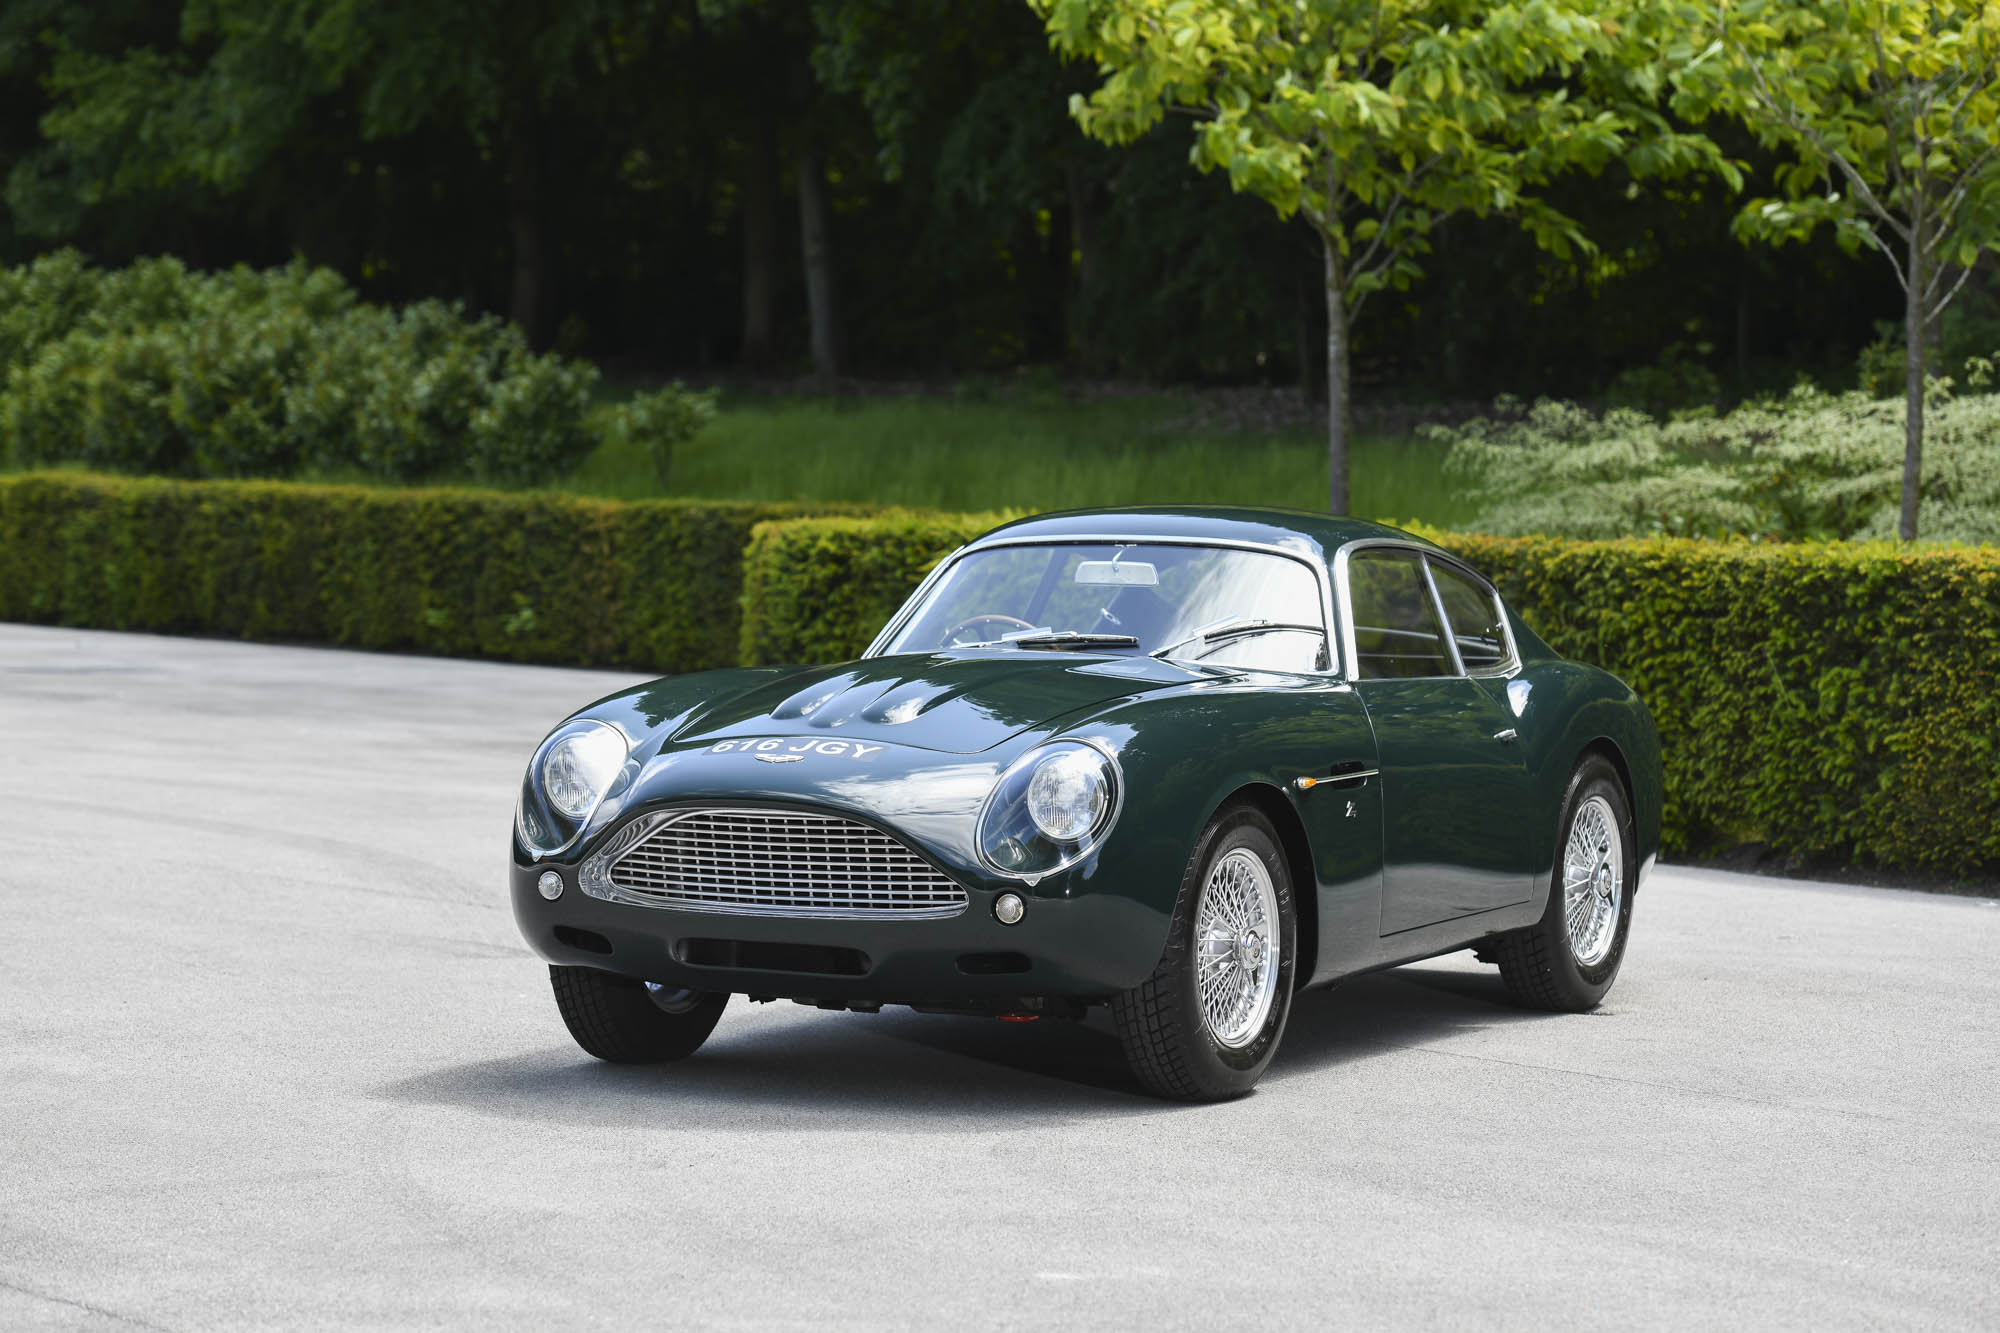 1961 Aston Martin DB4 GT Zagato - Delivered new to Sir Max Aitken 